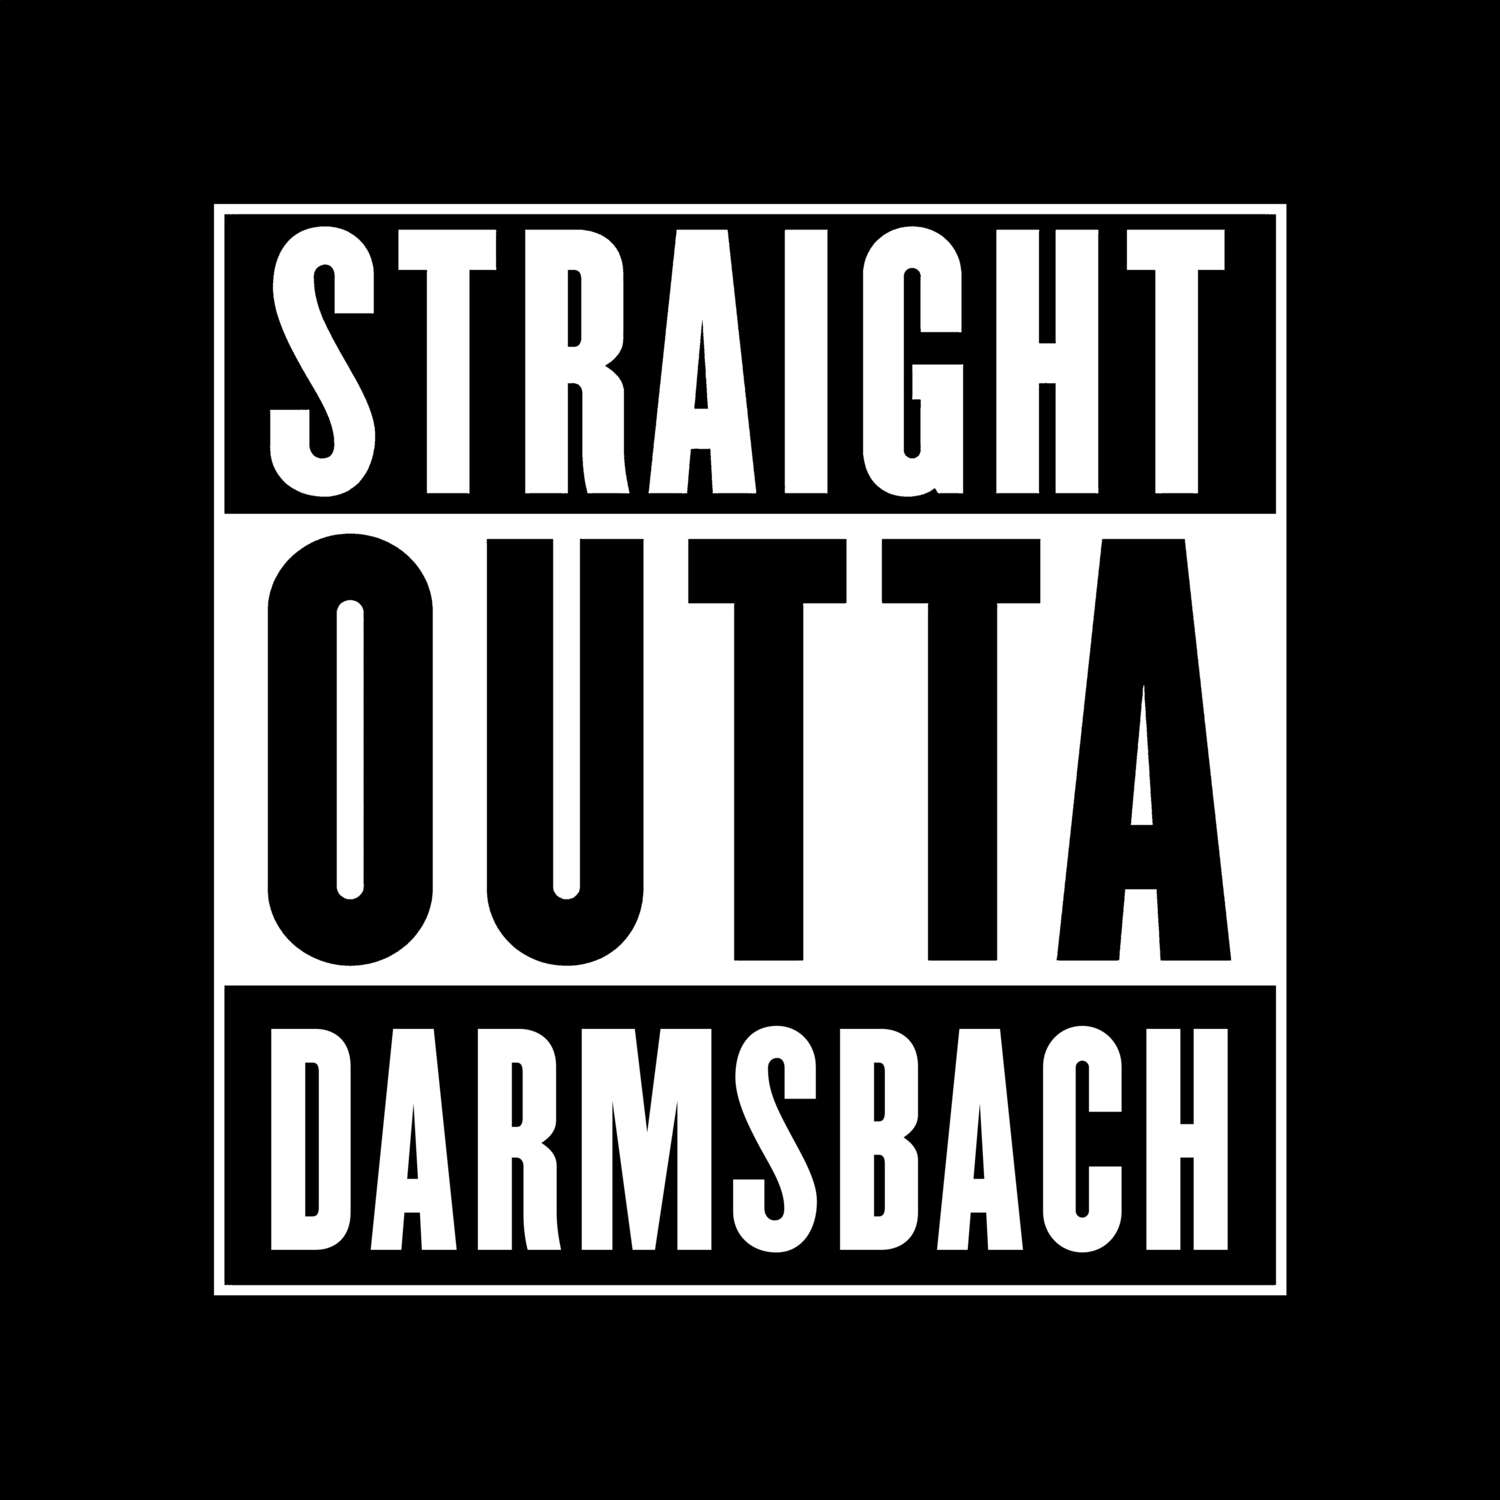 Darmsbach T-Shirt »Straight Outta«